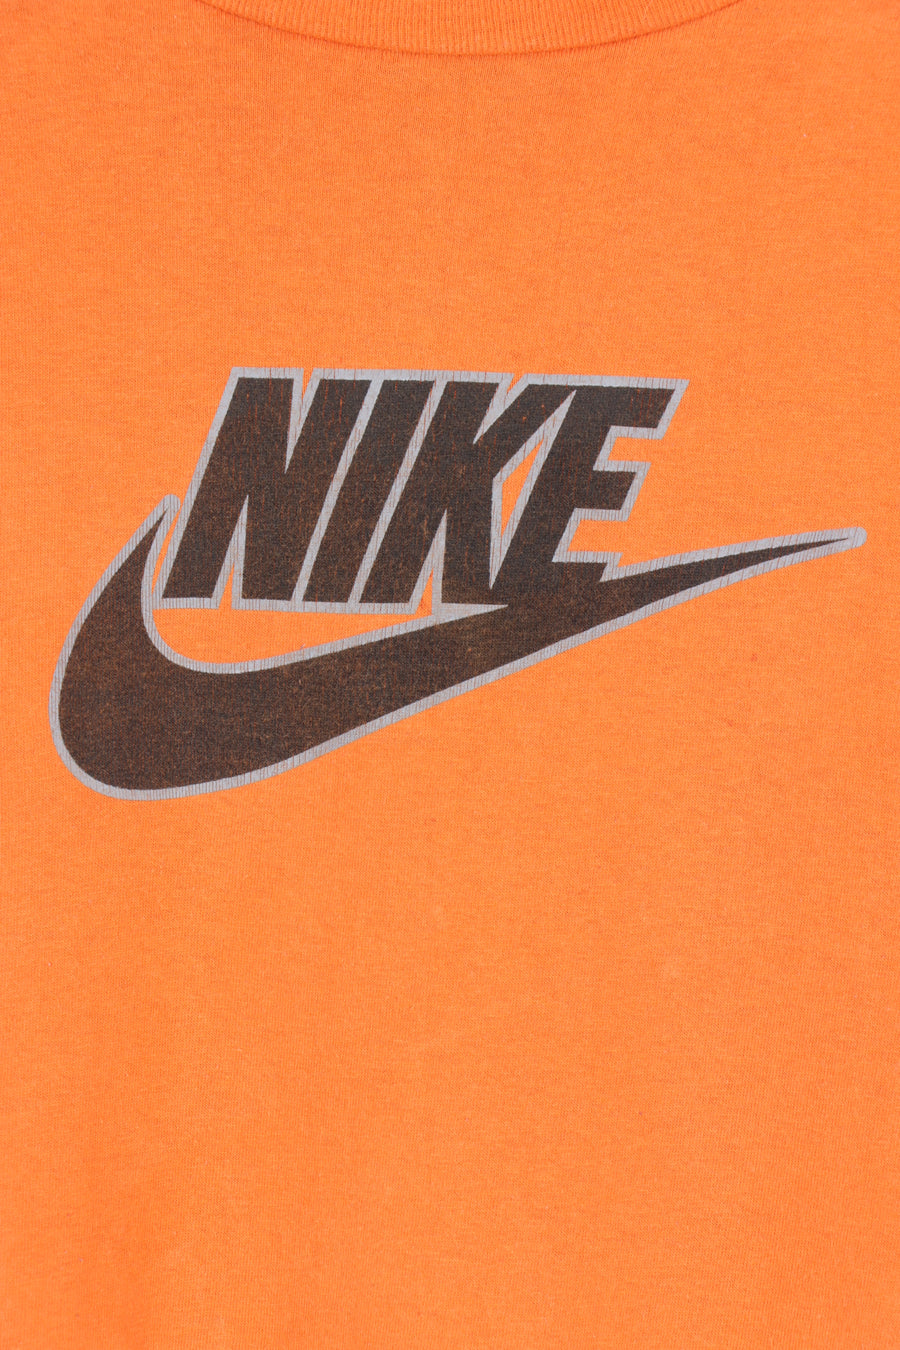 NIKE Orange & Black T-Shirt (XL)